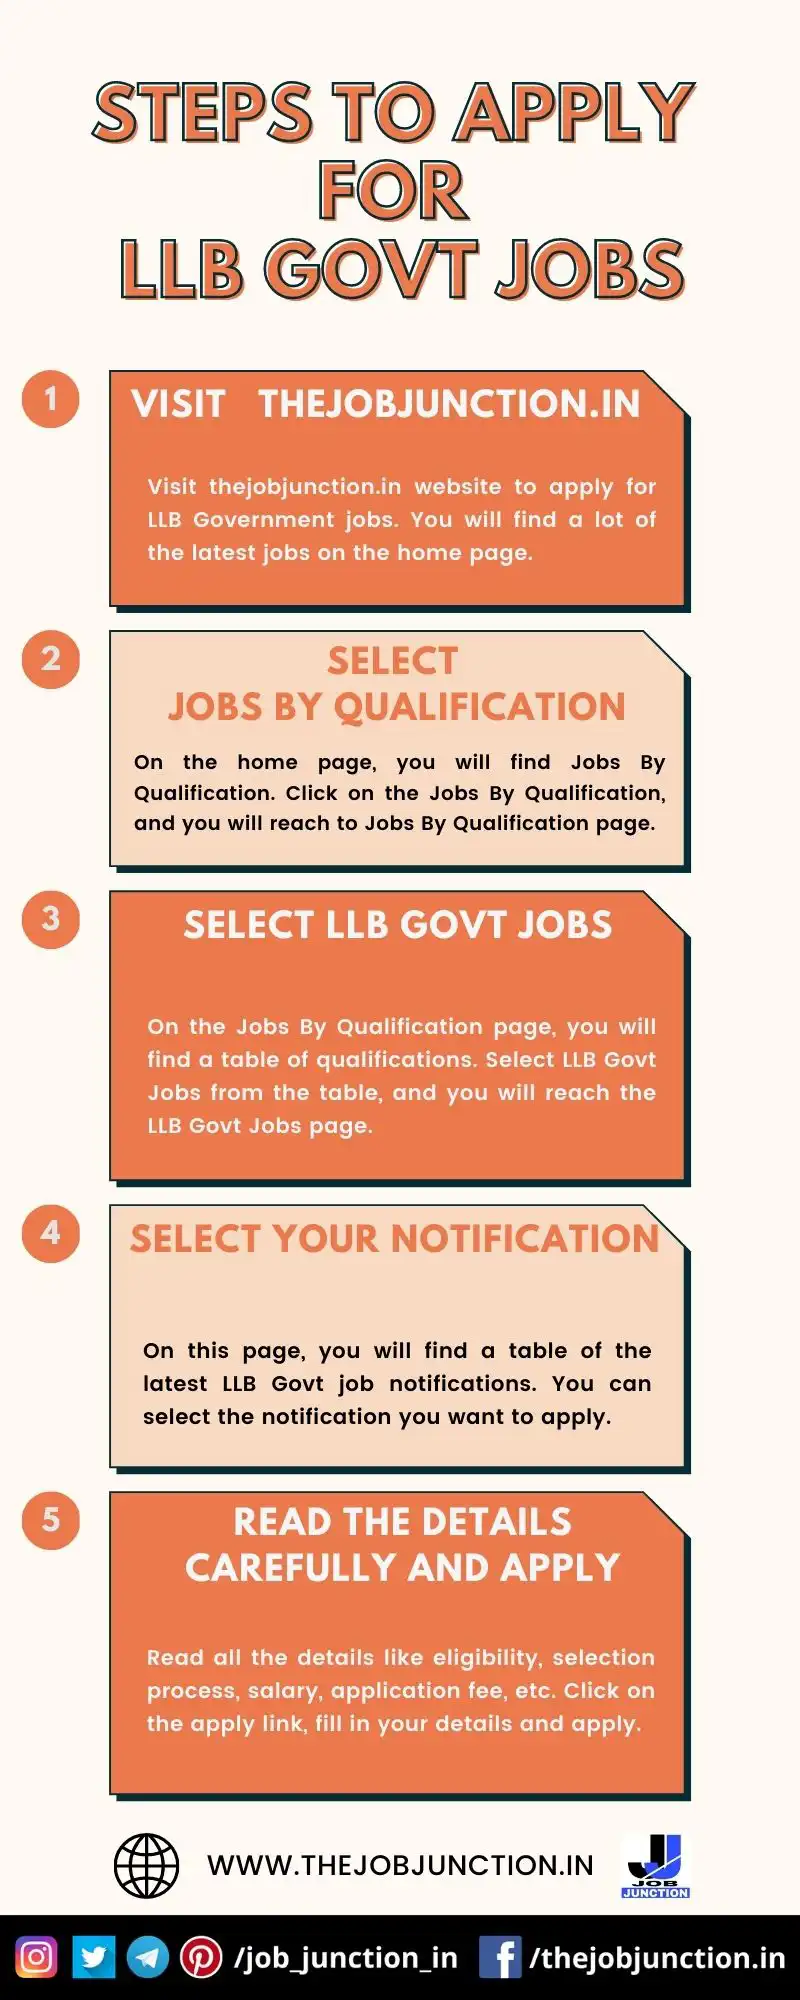 STEPS TO APPLY FOR LLB GOVT JOBS